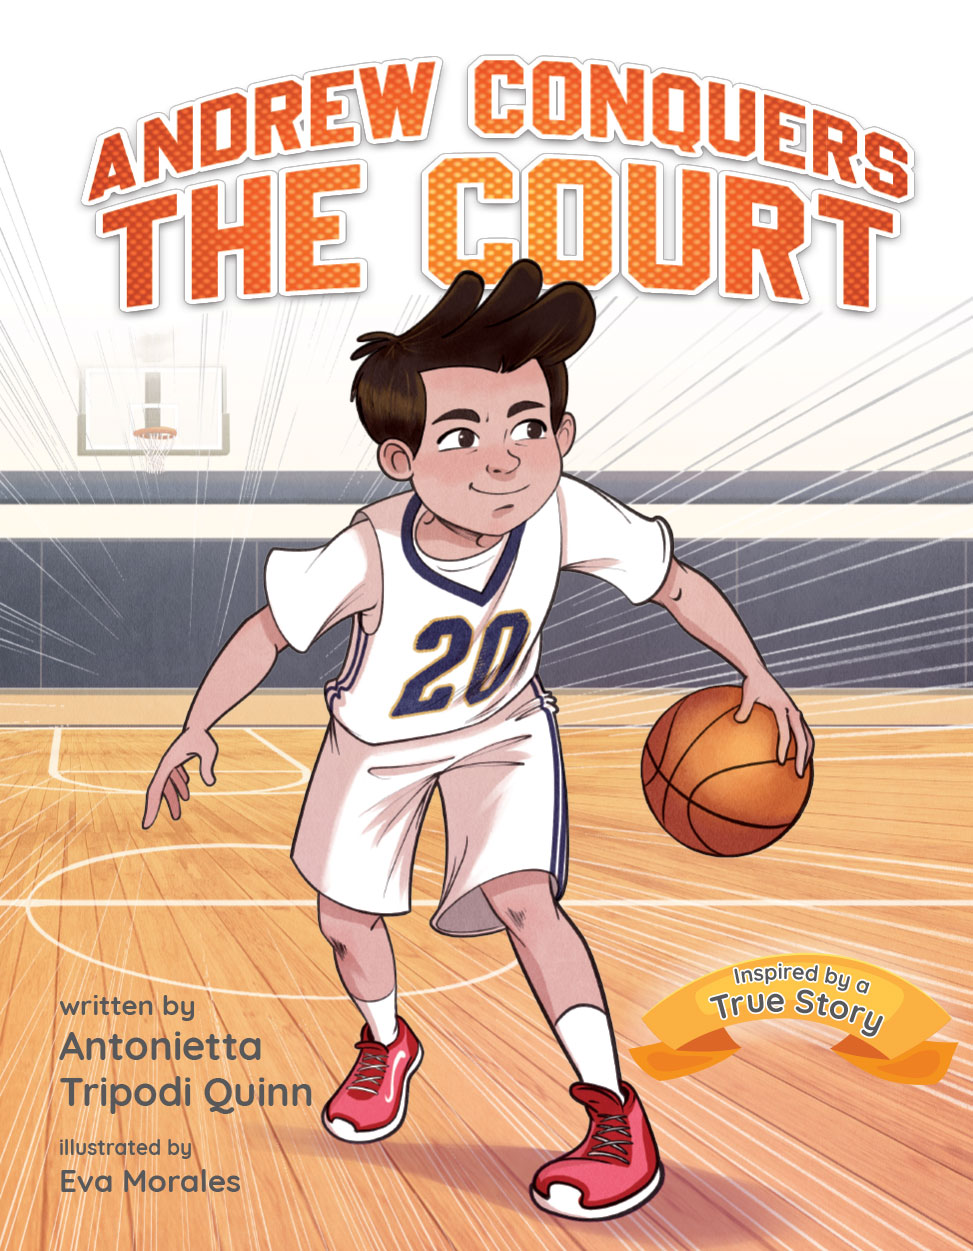 "Andrew Conquers the Court" by Antonietta Tripodi Quinn